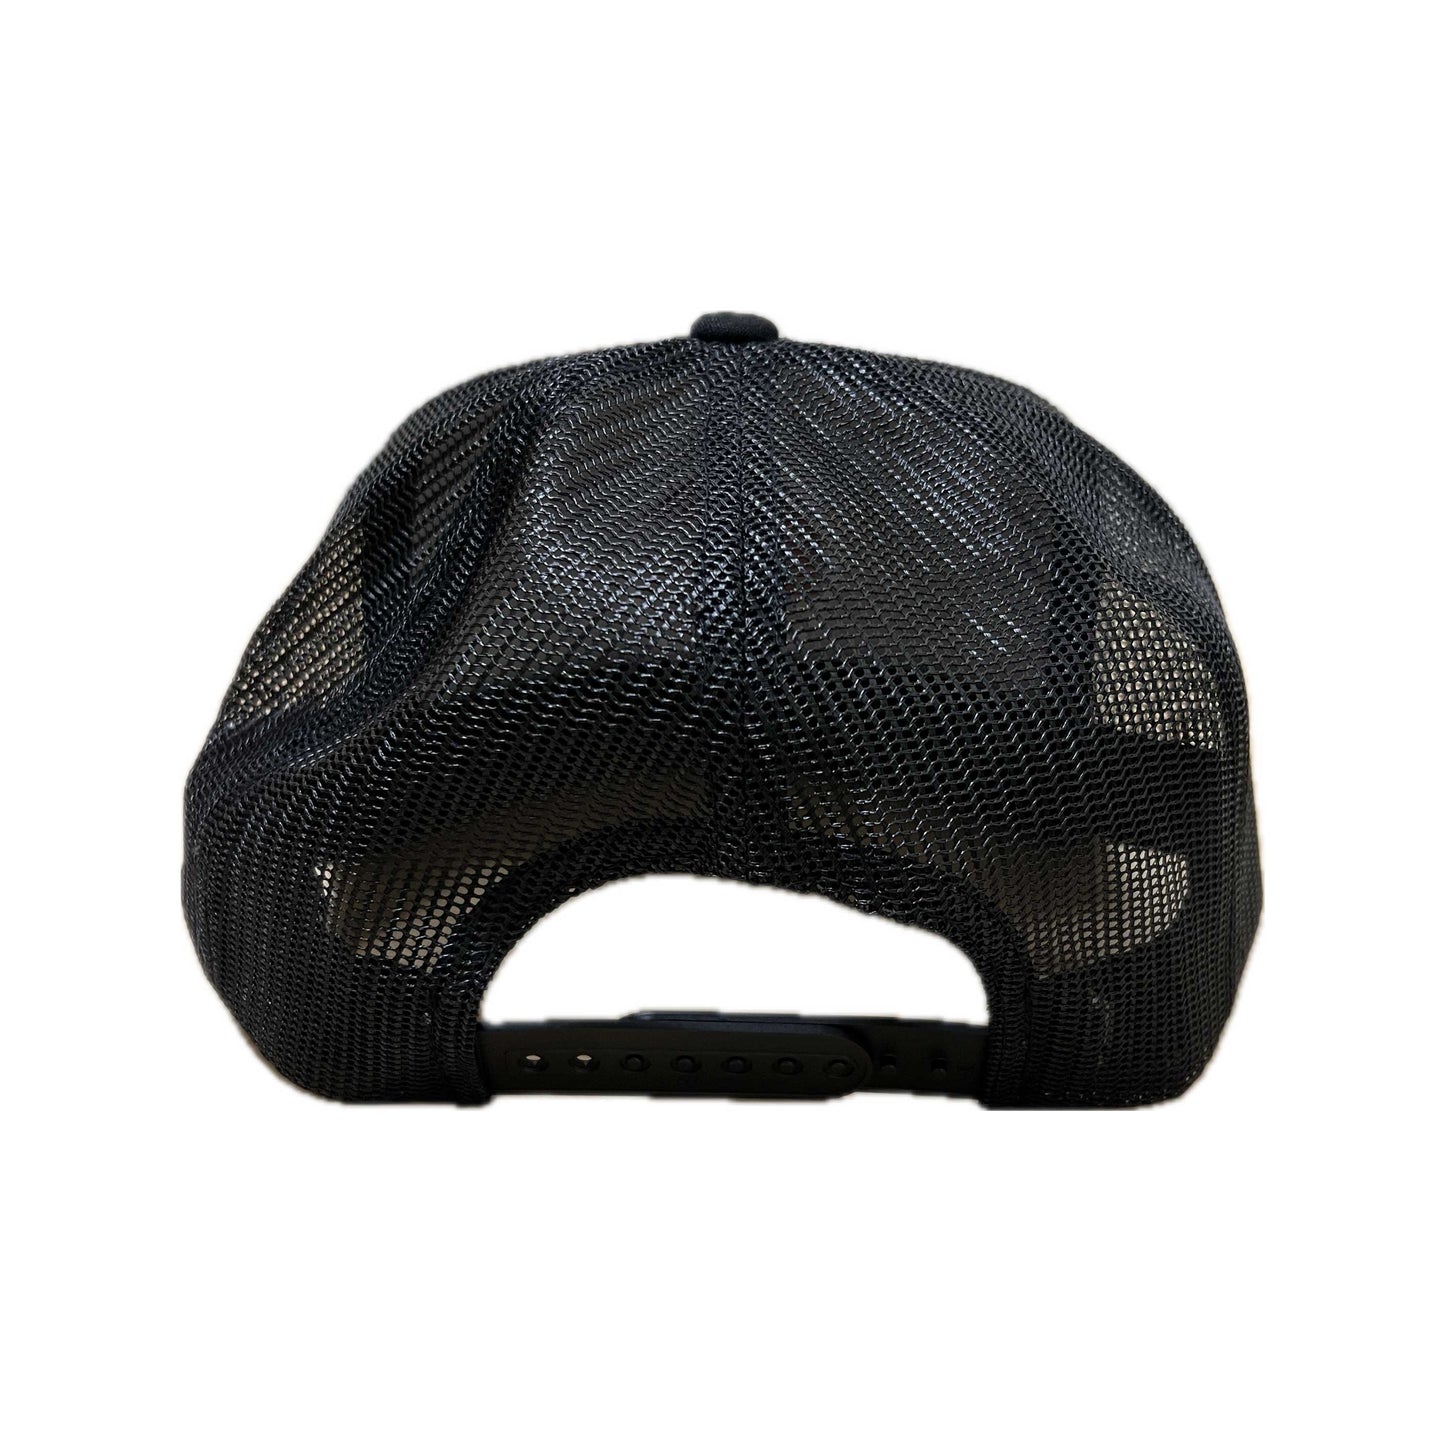 BASIC LOGO Snapback hats Black Mesh